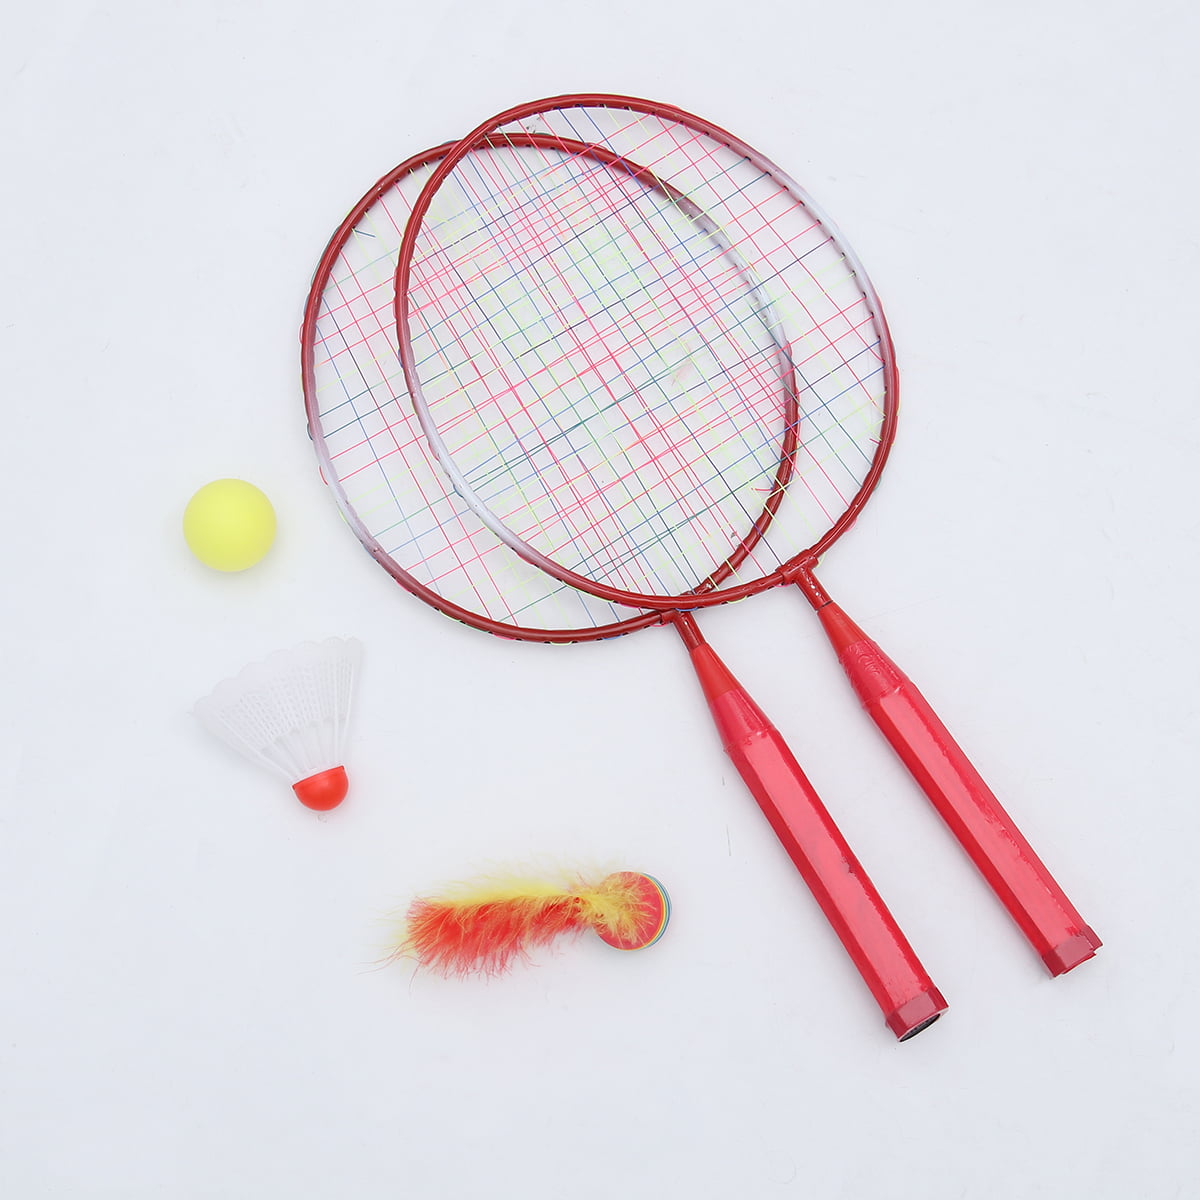 Kids 1 Set Colored Badminton Racket Beginner Training Outdoor Sports Leisure Toy 